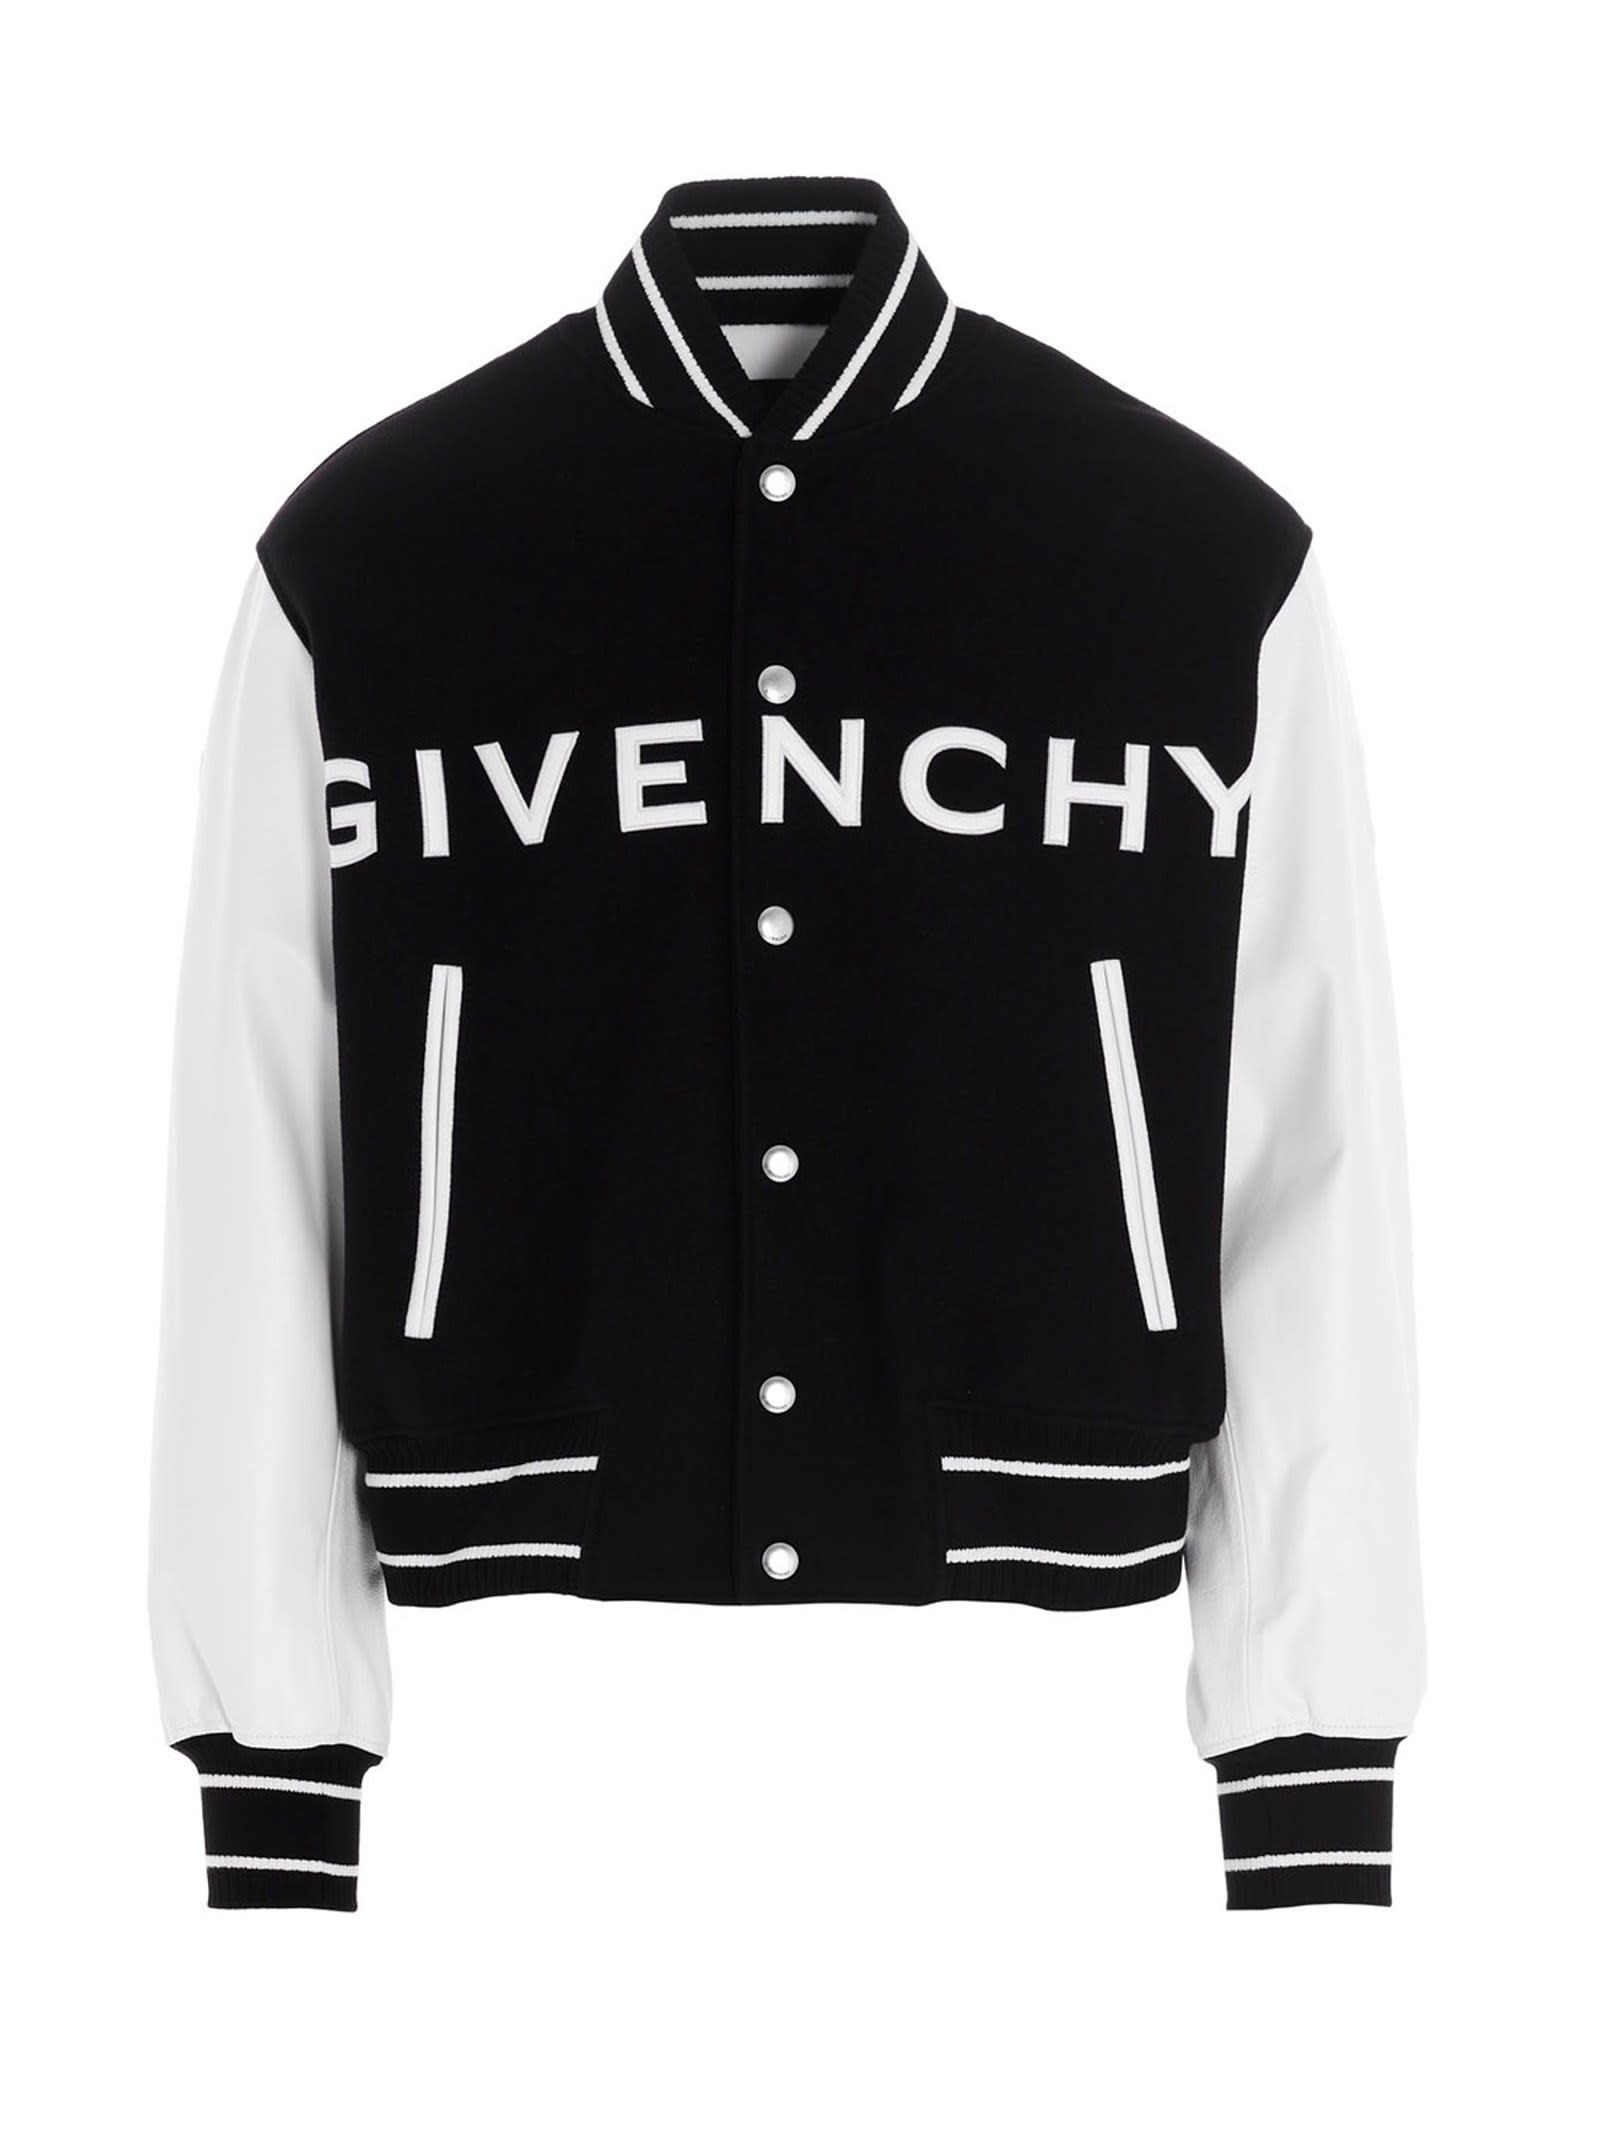 Givenchy Logo Bomber Jacket. In White/black